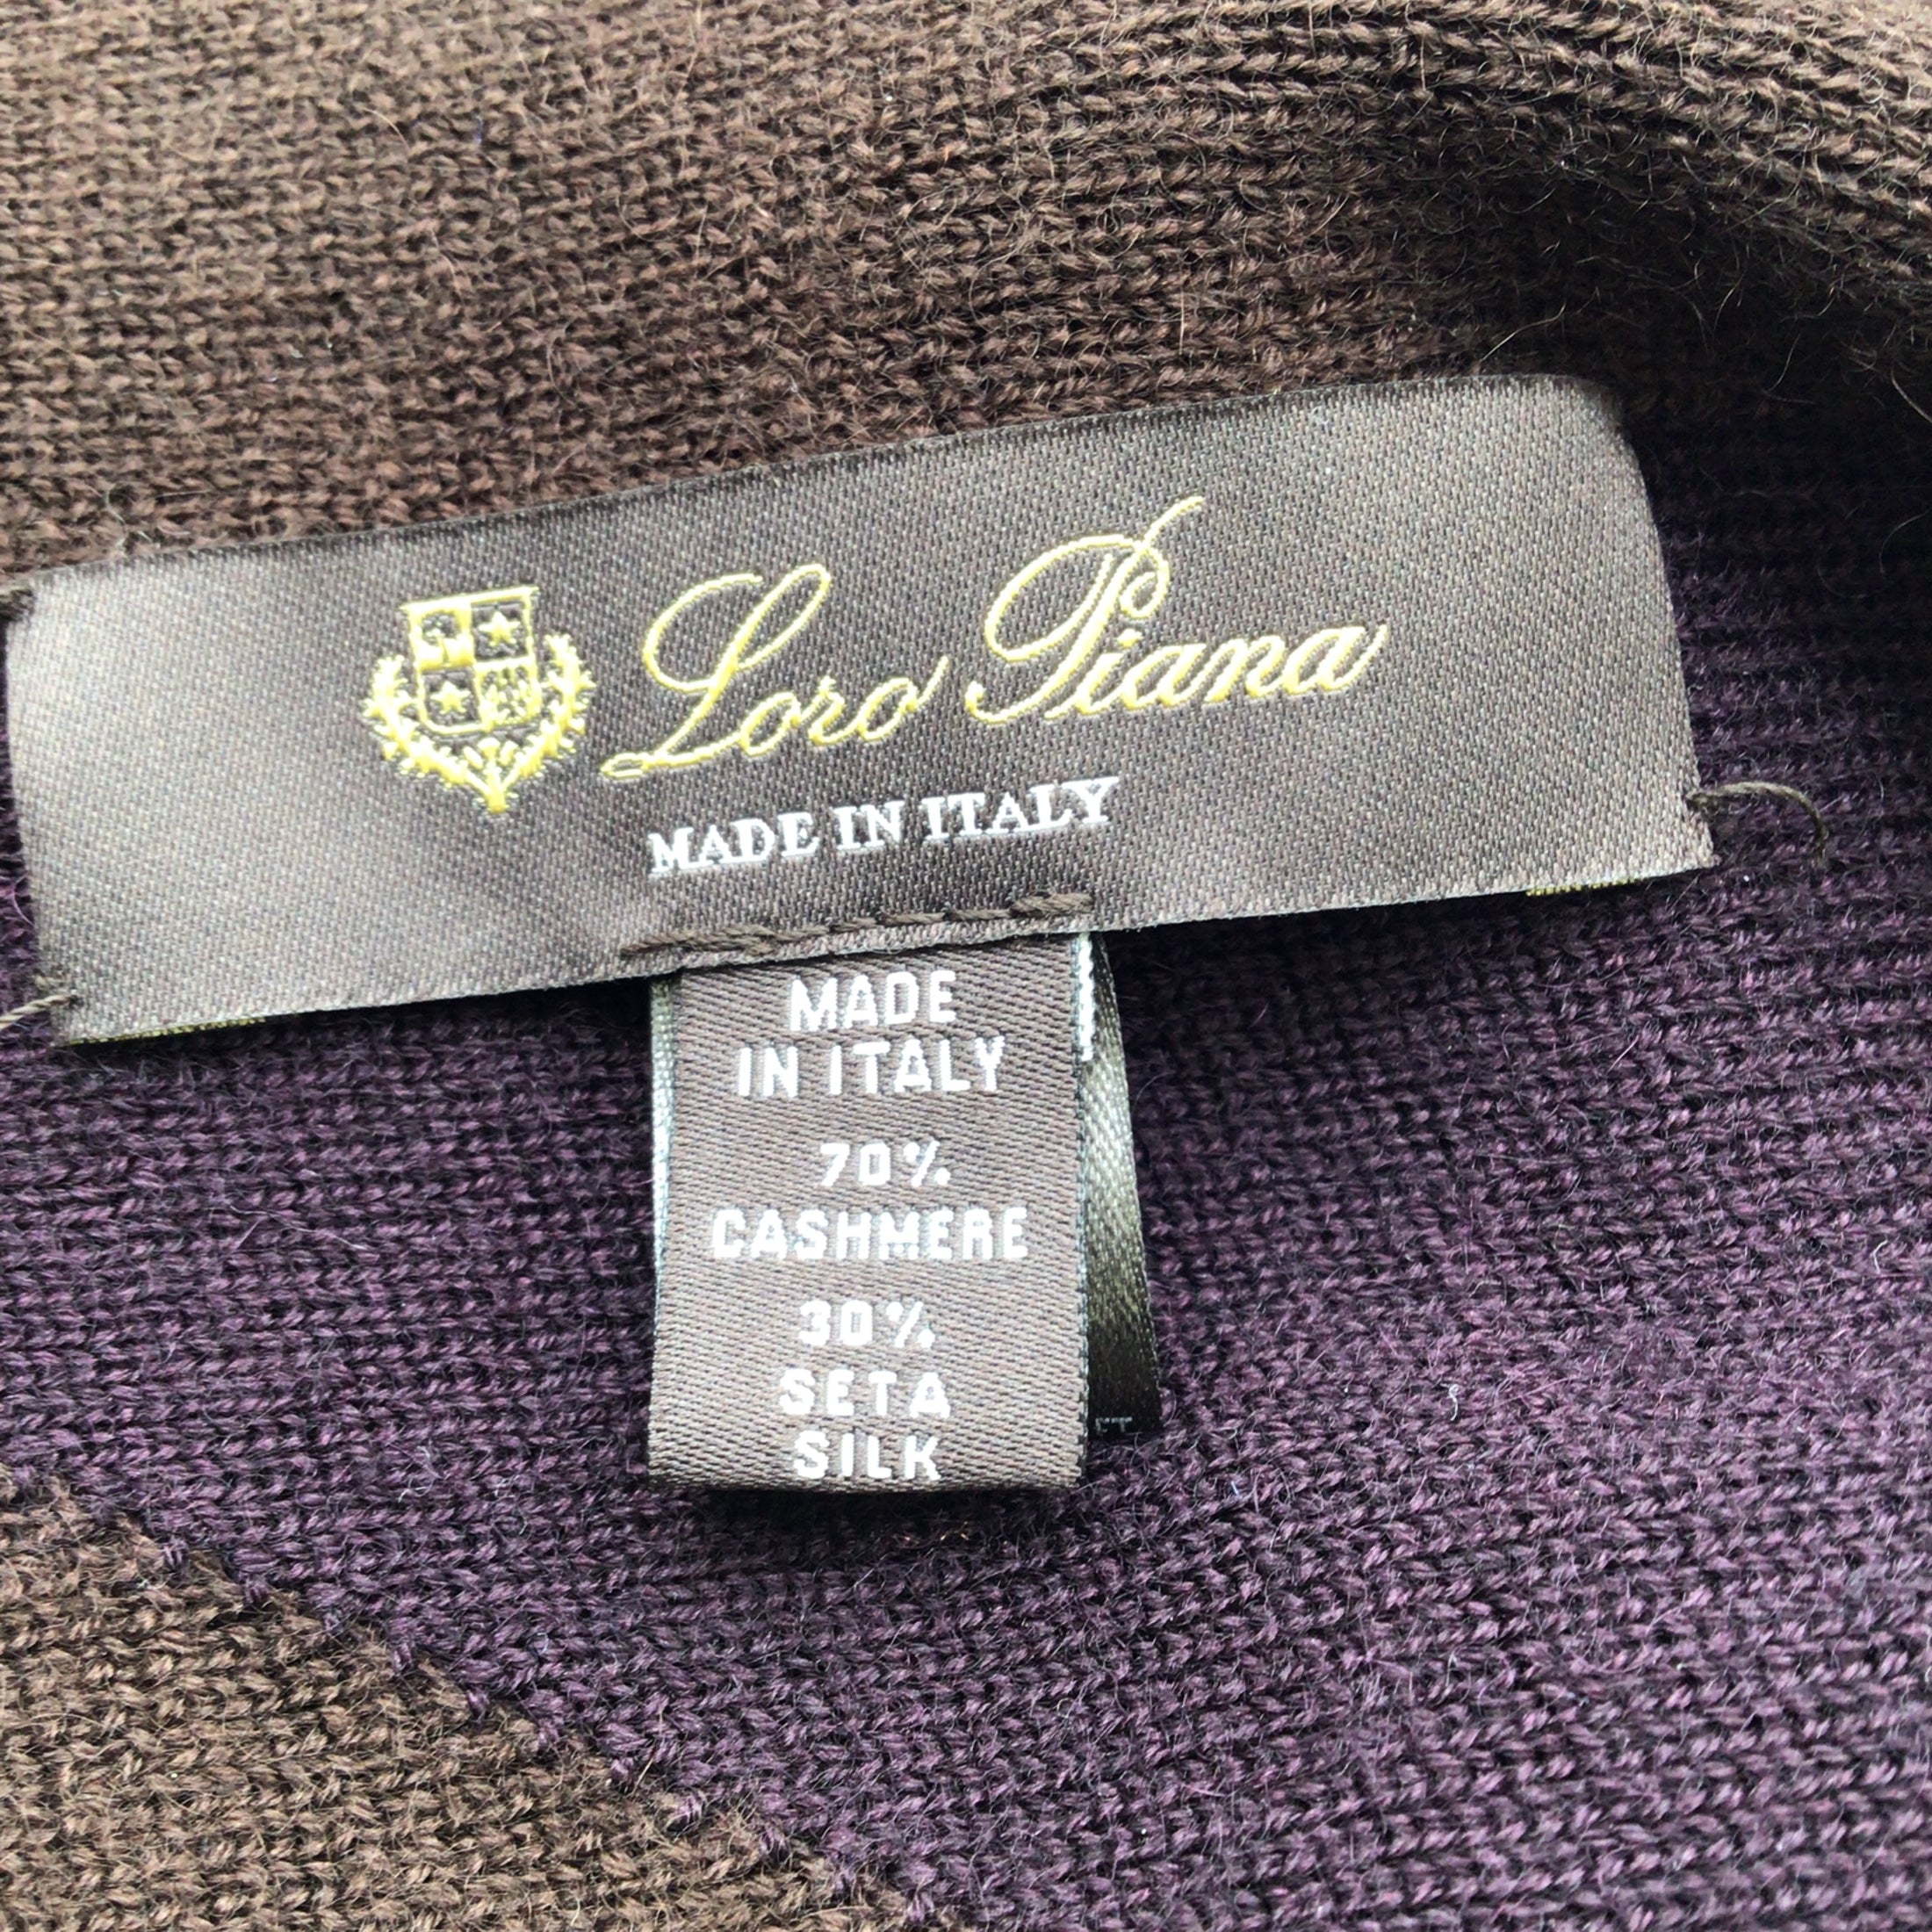 Loro Piana Plum Purple / Brown Scialle Twice Cashmere and Silk Knit Triangle Scarf